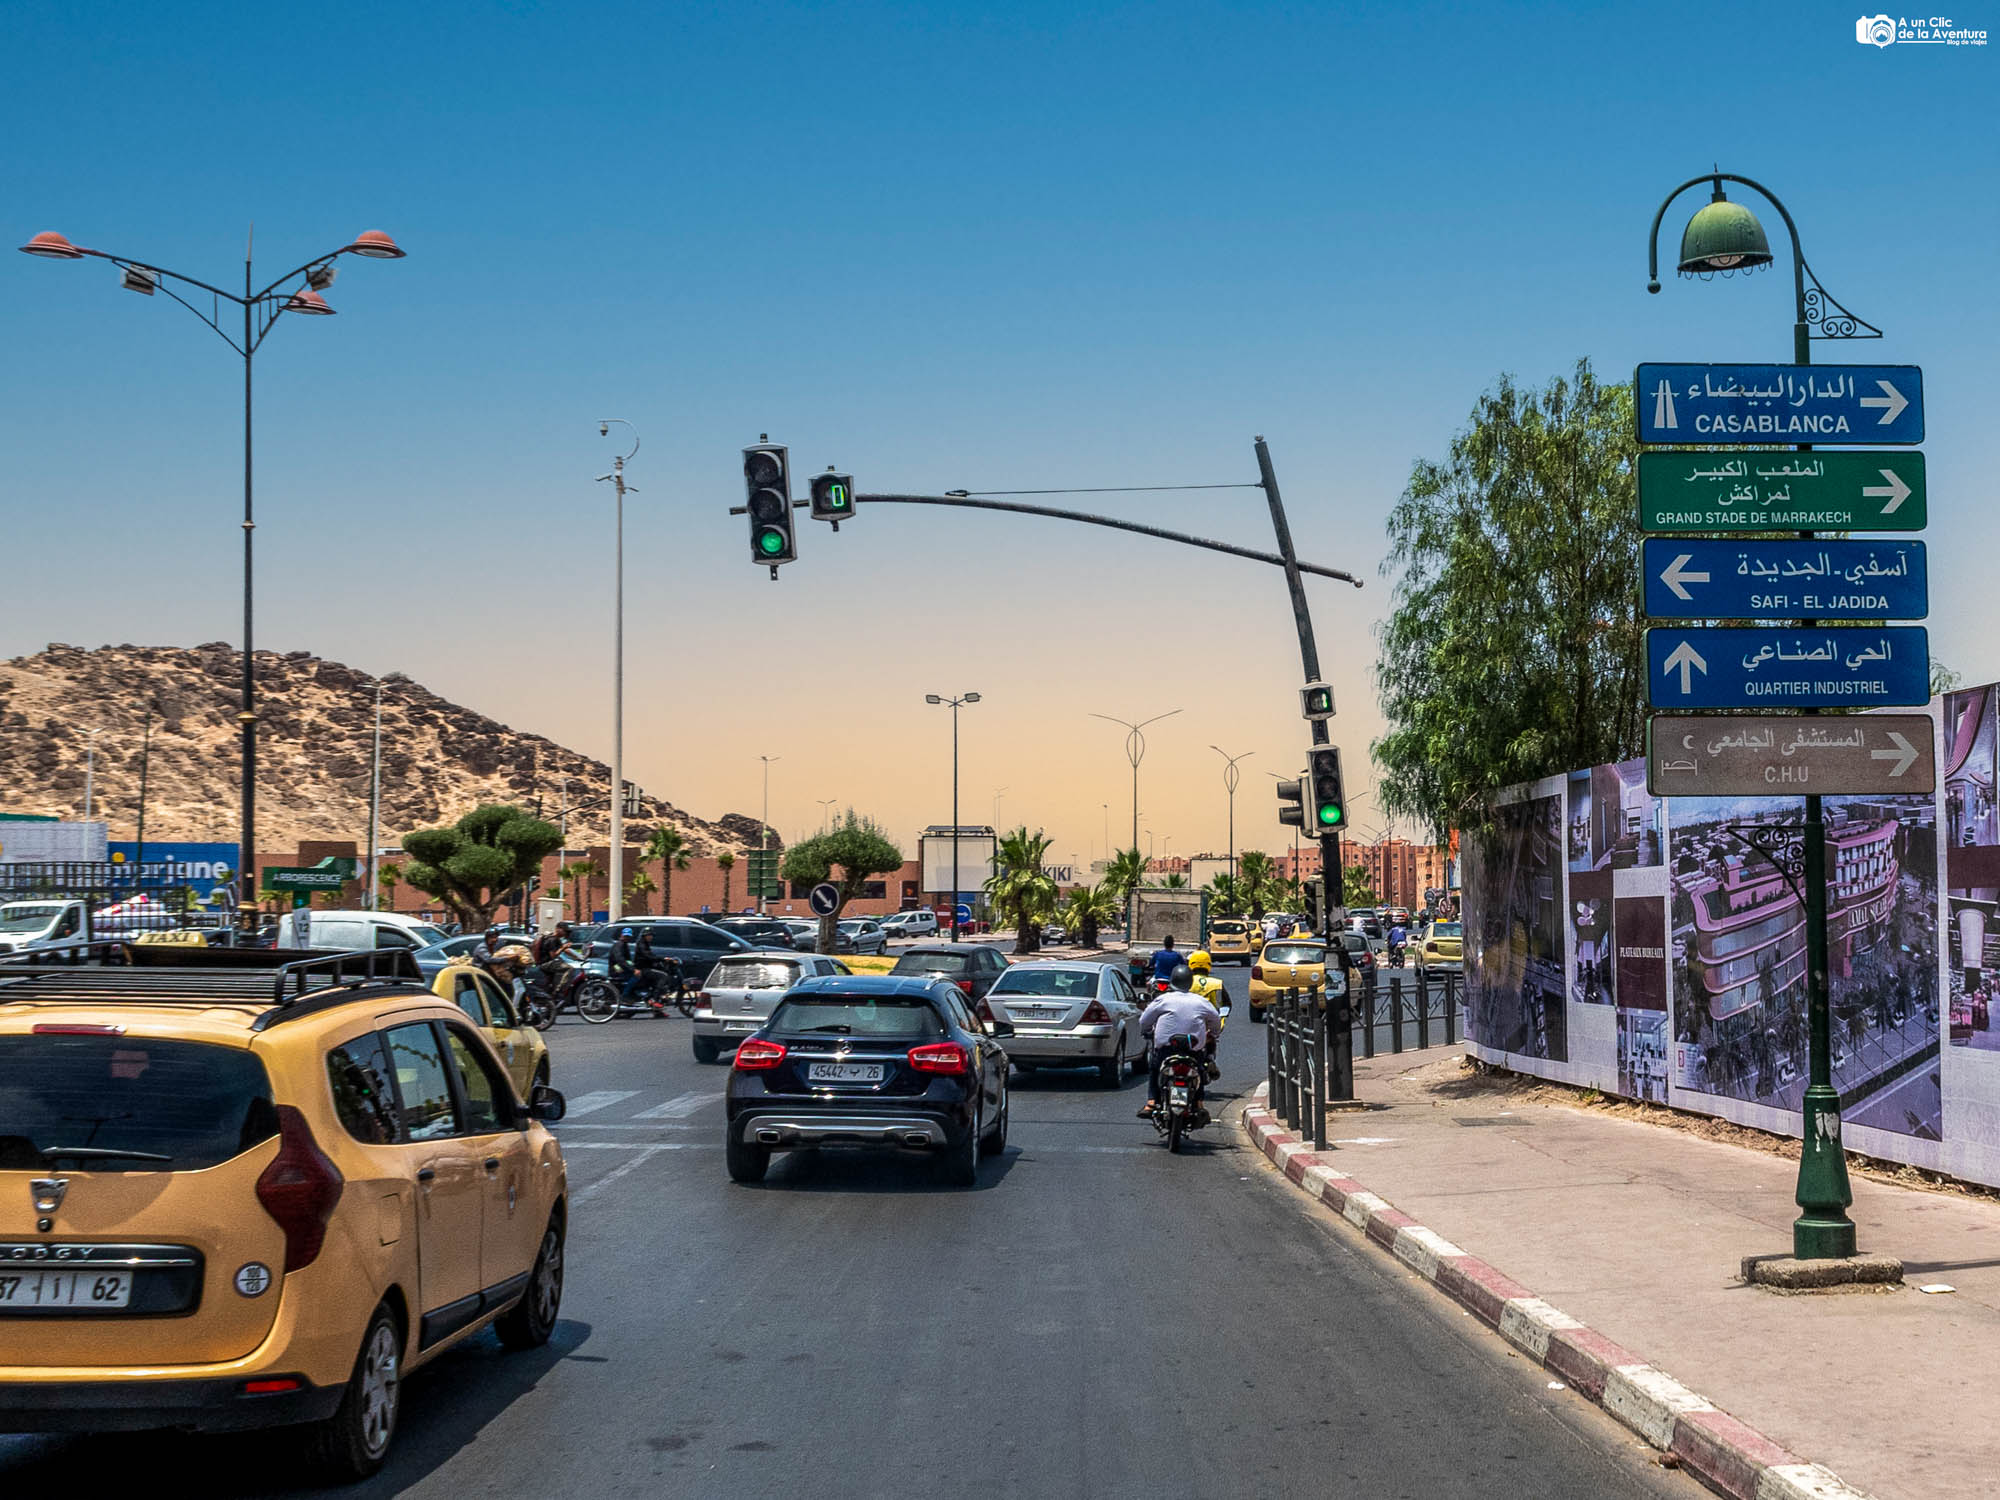 Tráfico en Marrakech, Marruecos en coche